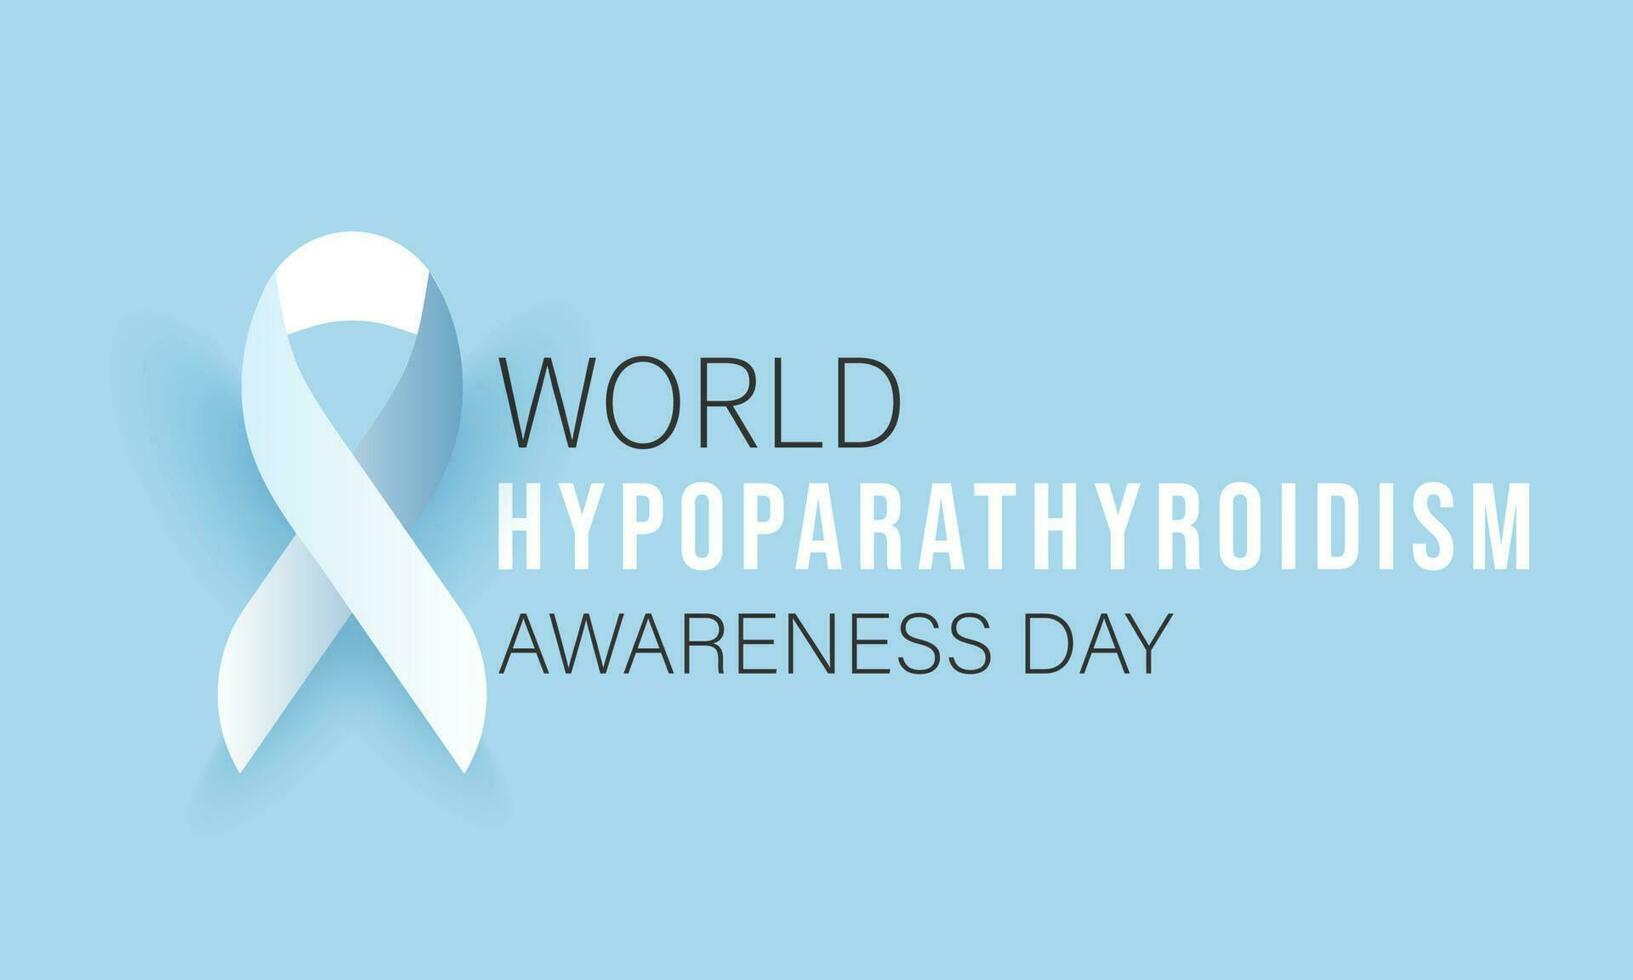 World Hypoparathyroidism awareness day. background, banner, card, poster, template. Vector illustration.